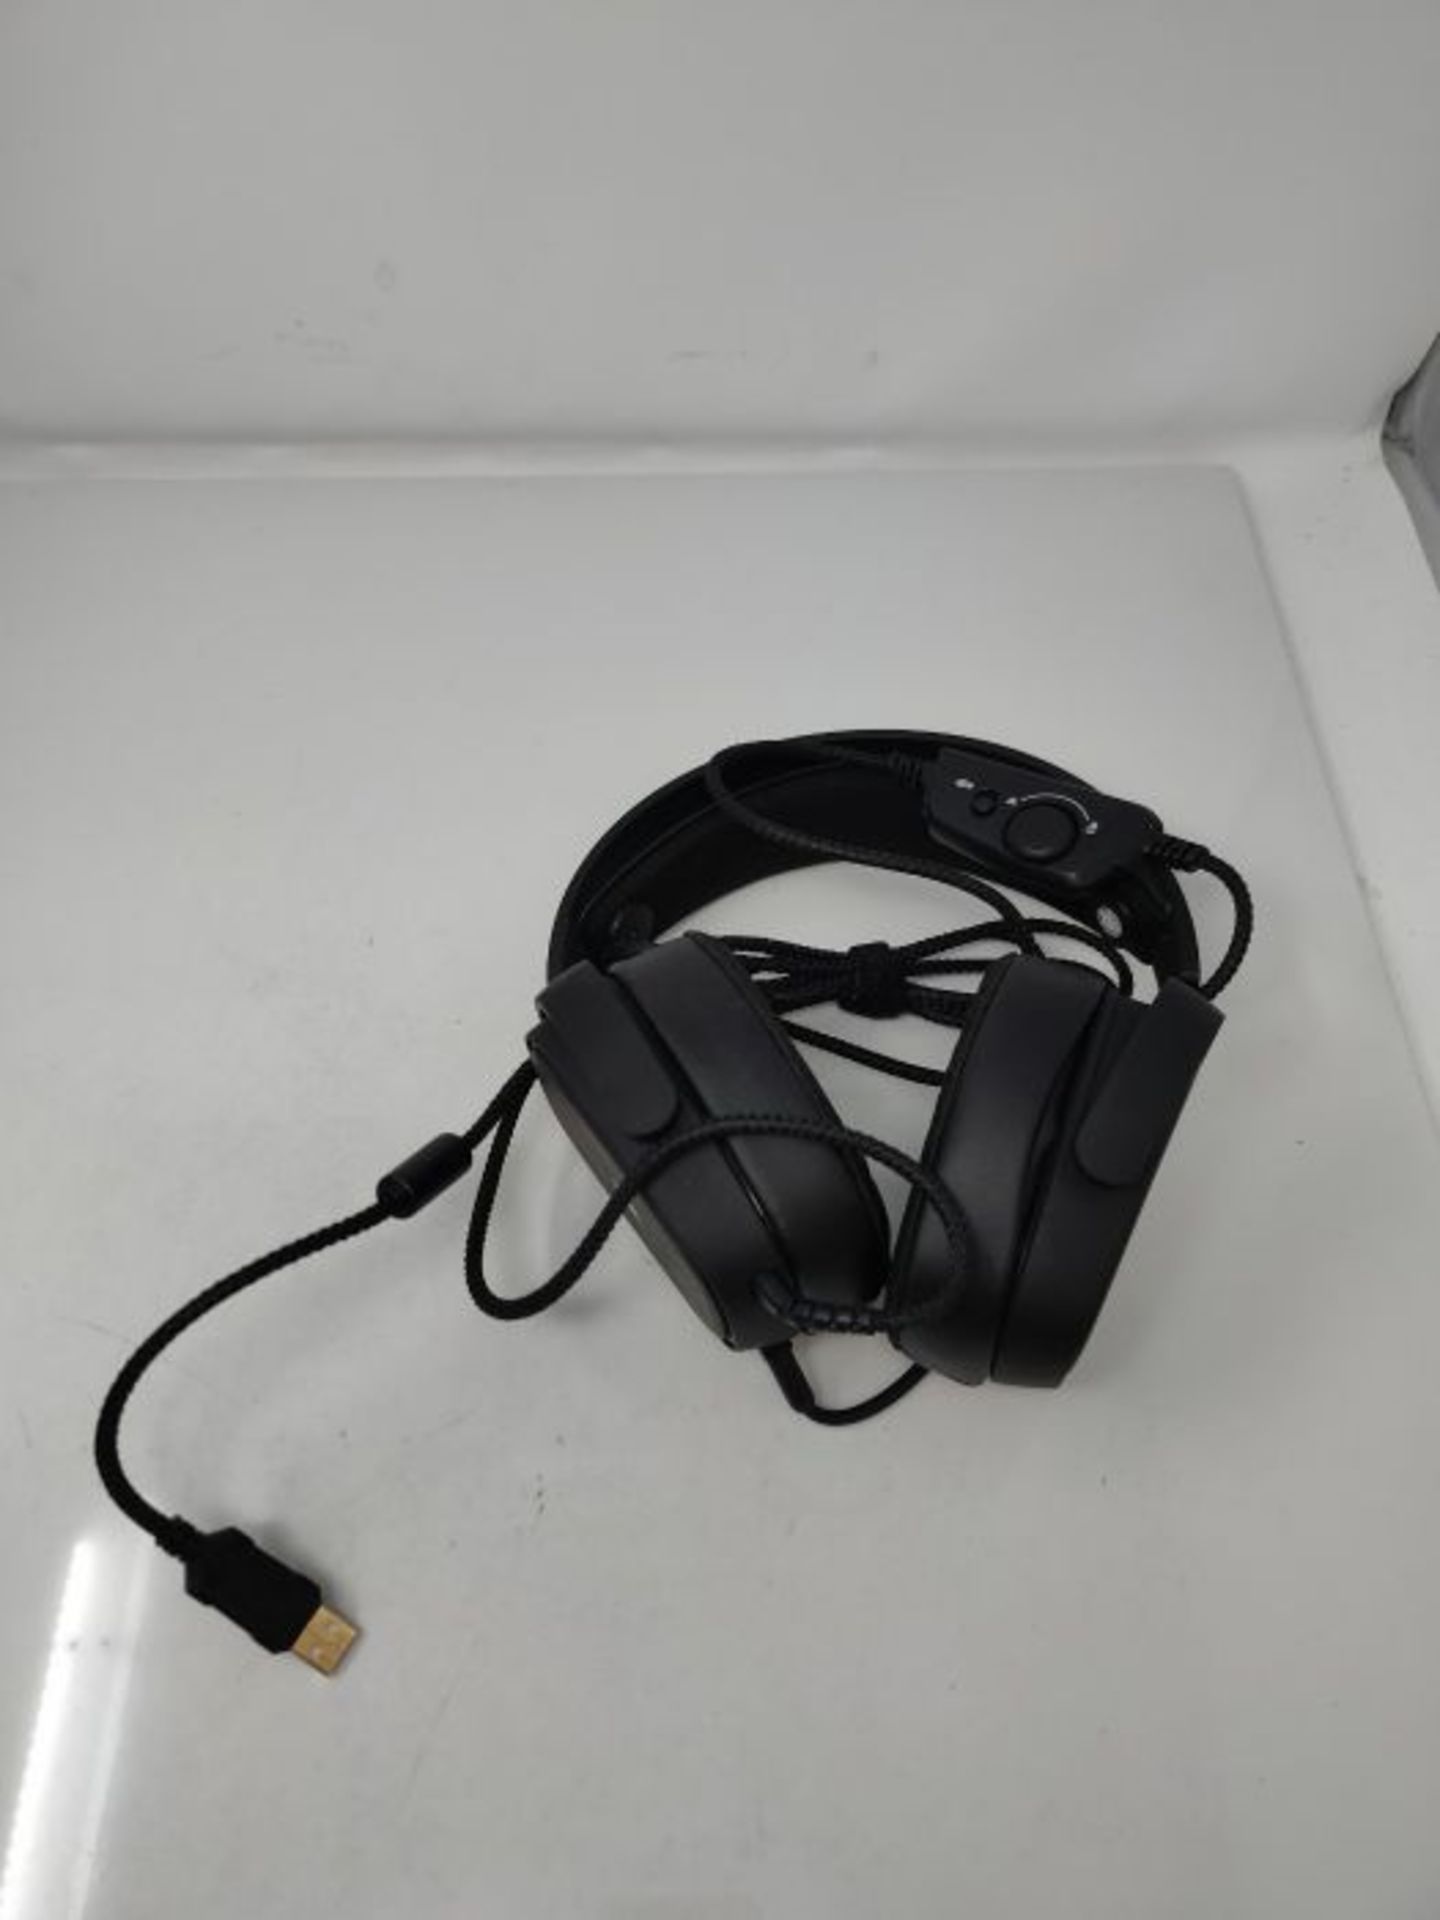 CSL - Titanwolf PC Headset 7.1 Virtuell Surround - 1,95 cm Kabel mit Stoffummantelung - Image 3 of 3